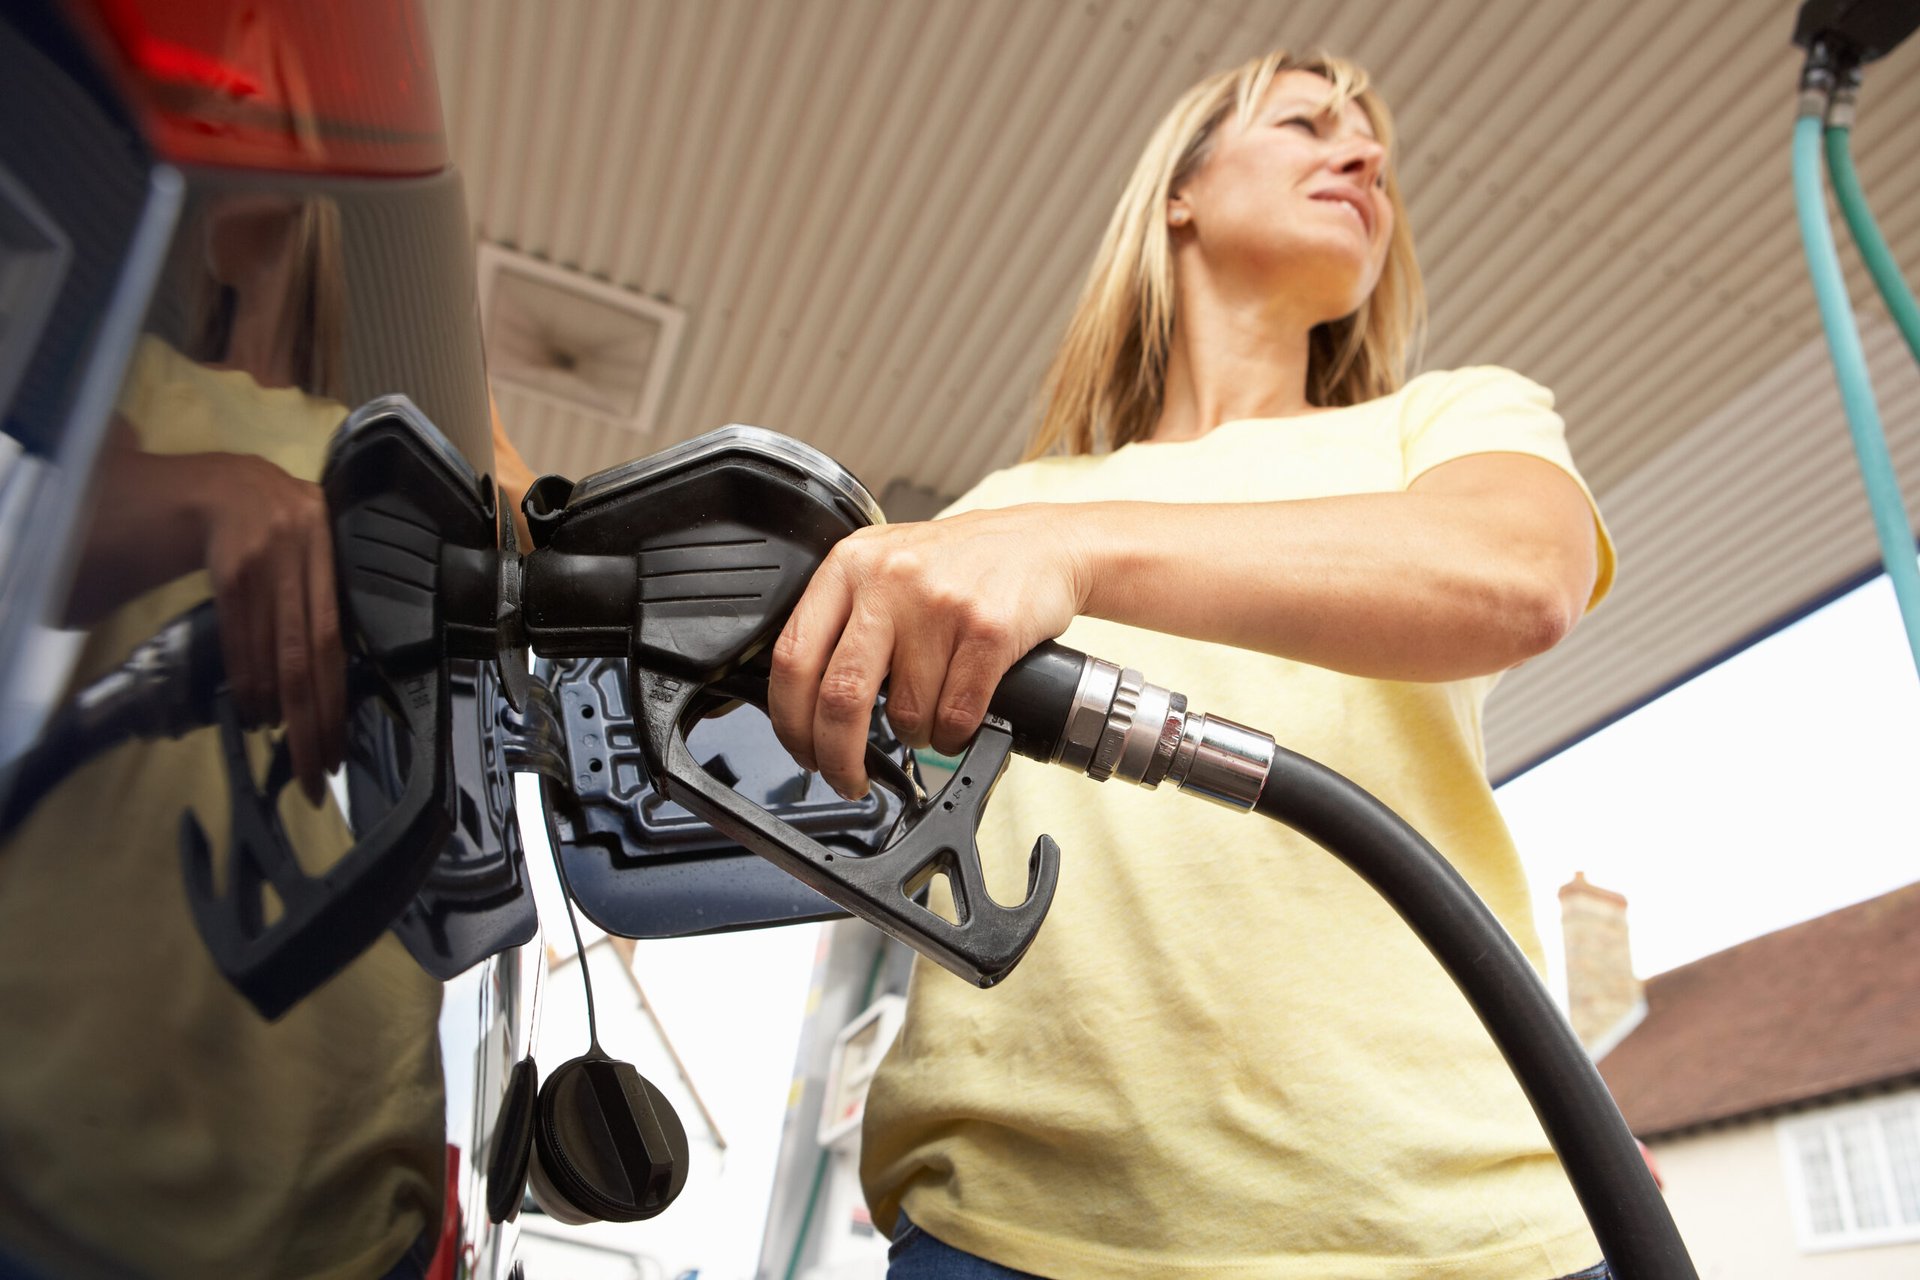 Woman filling up gas tank